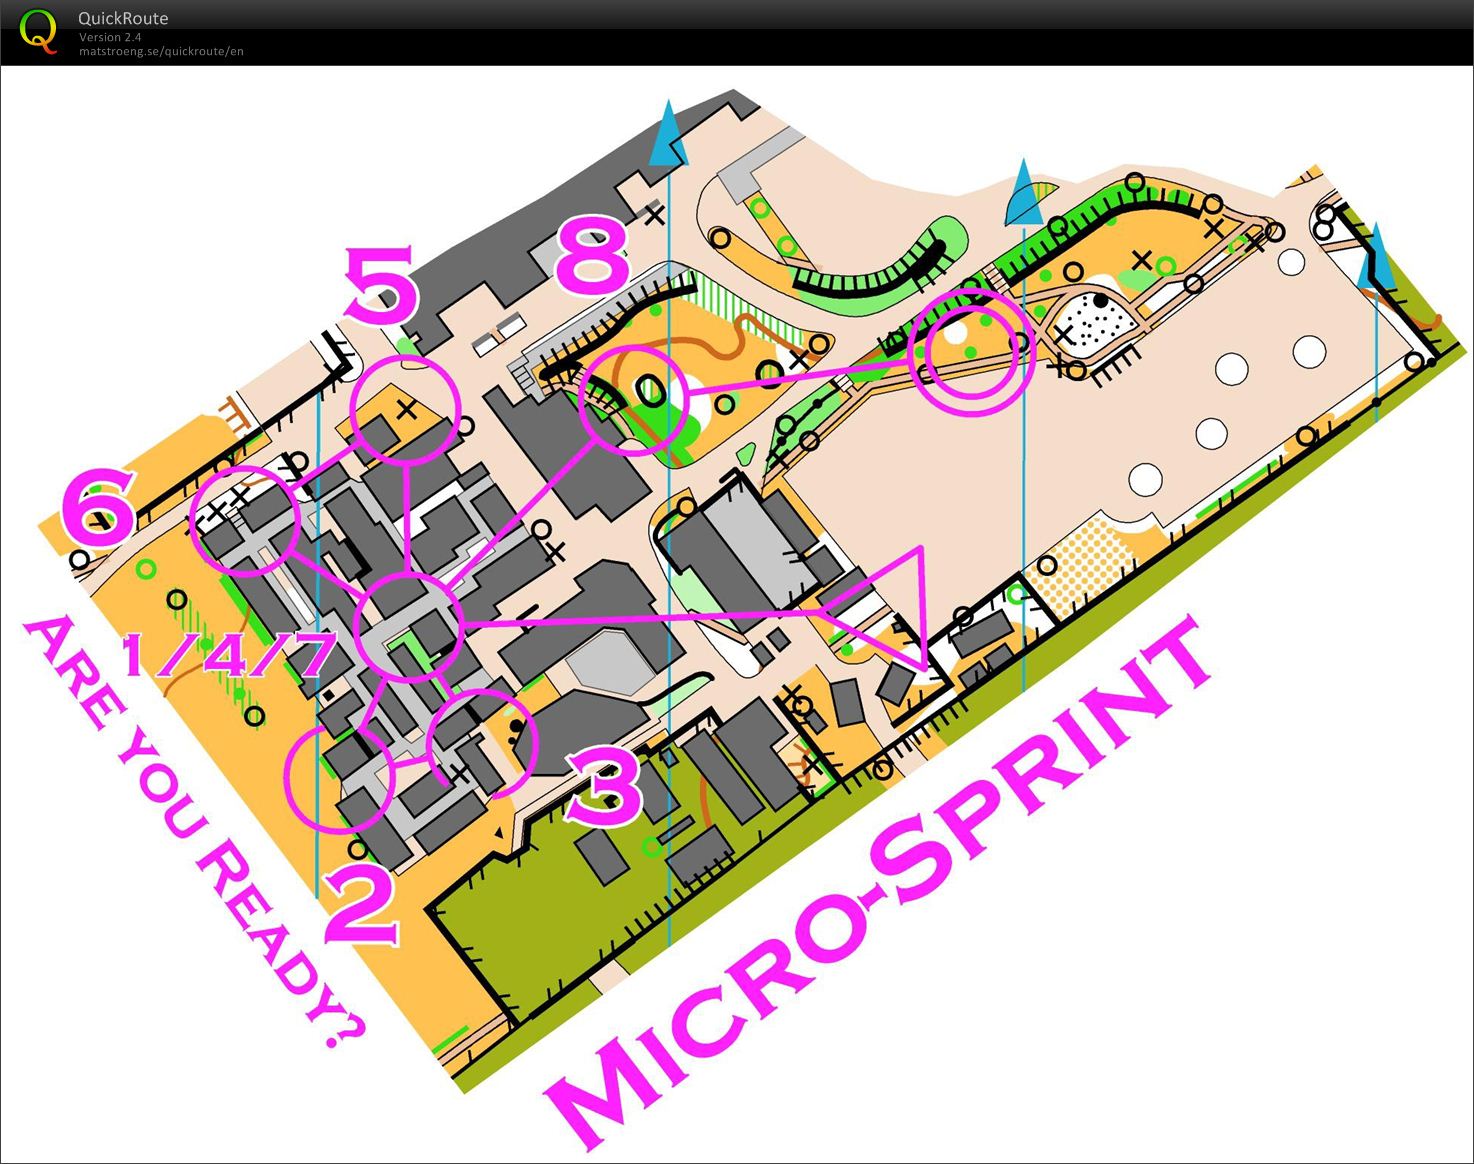 Matts MicroSprint (31/01/2012)